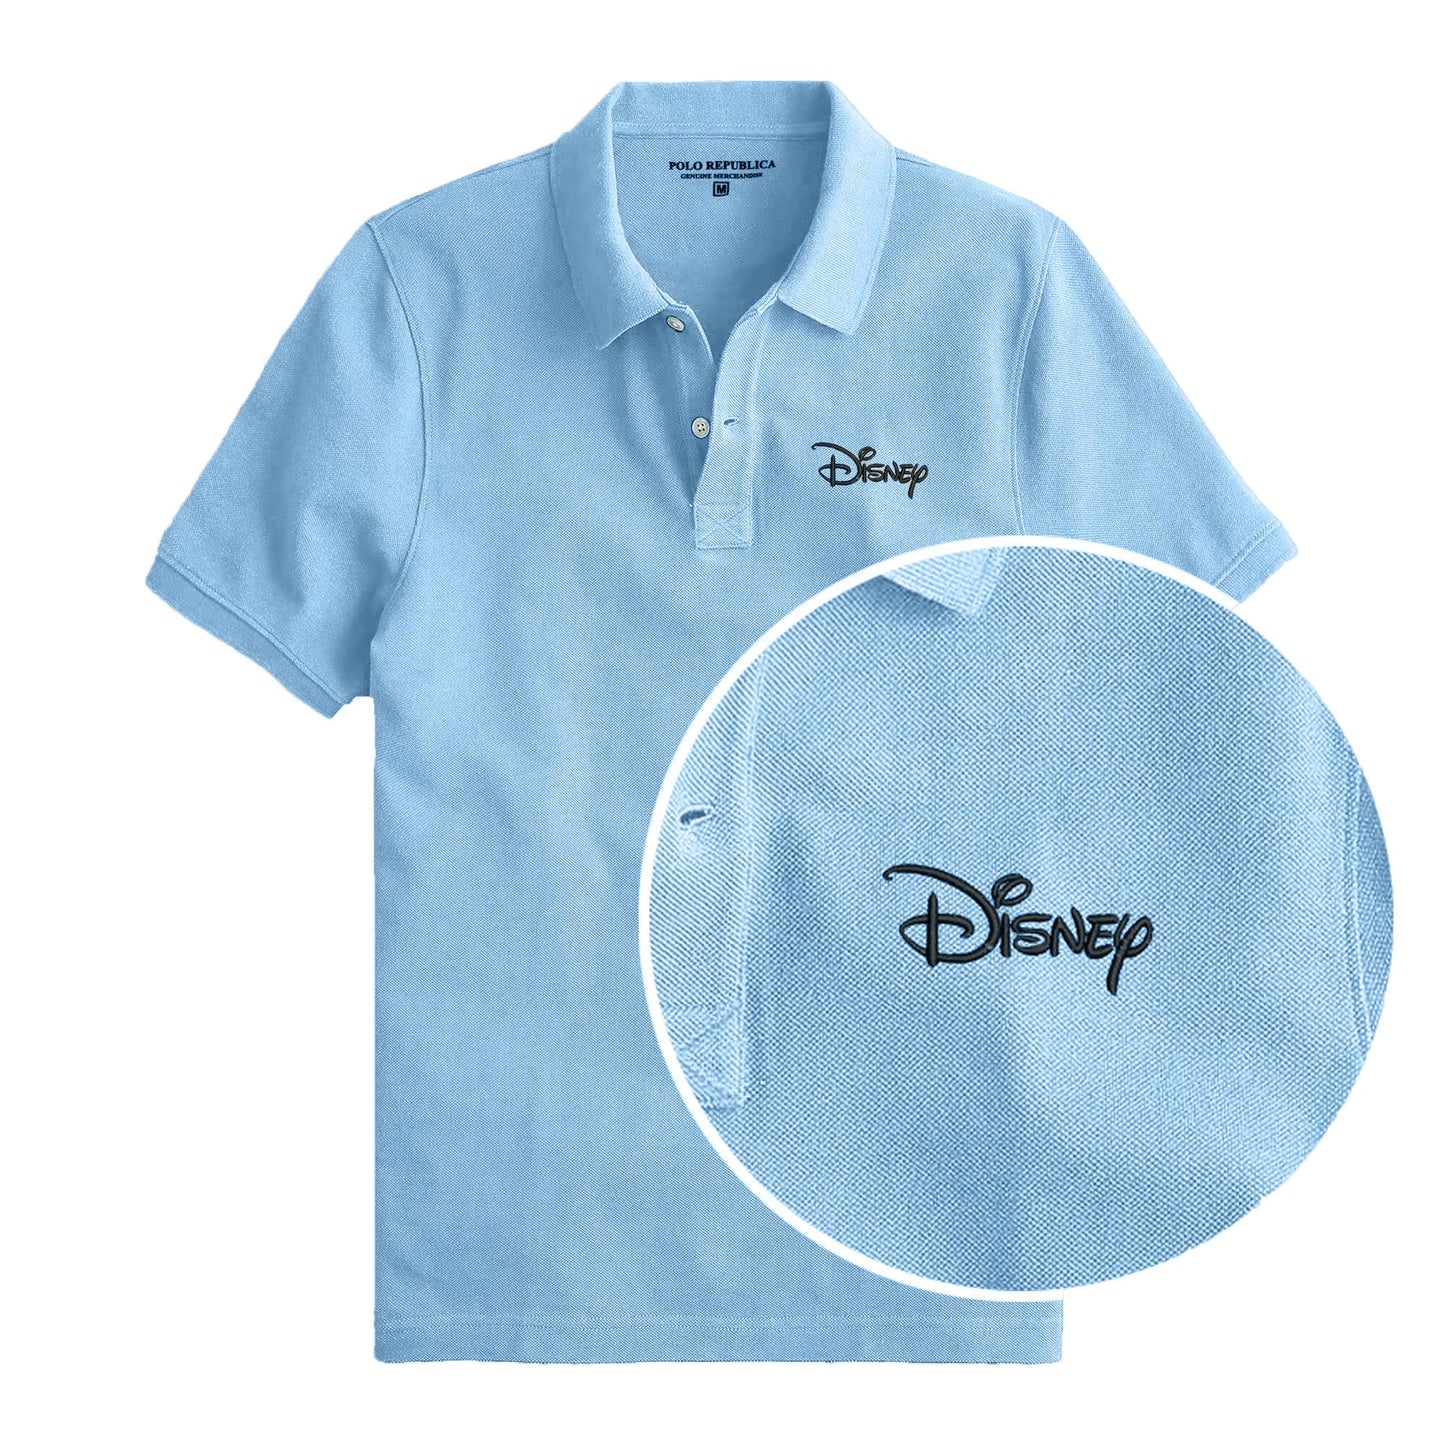 Sample Men's Custom Print/Embroidered Short Sleeve Polo Shirts